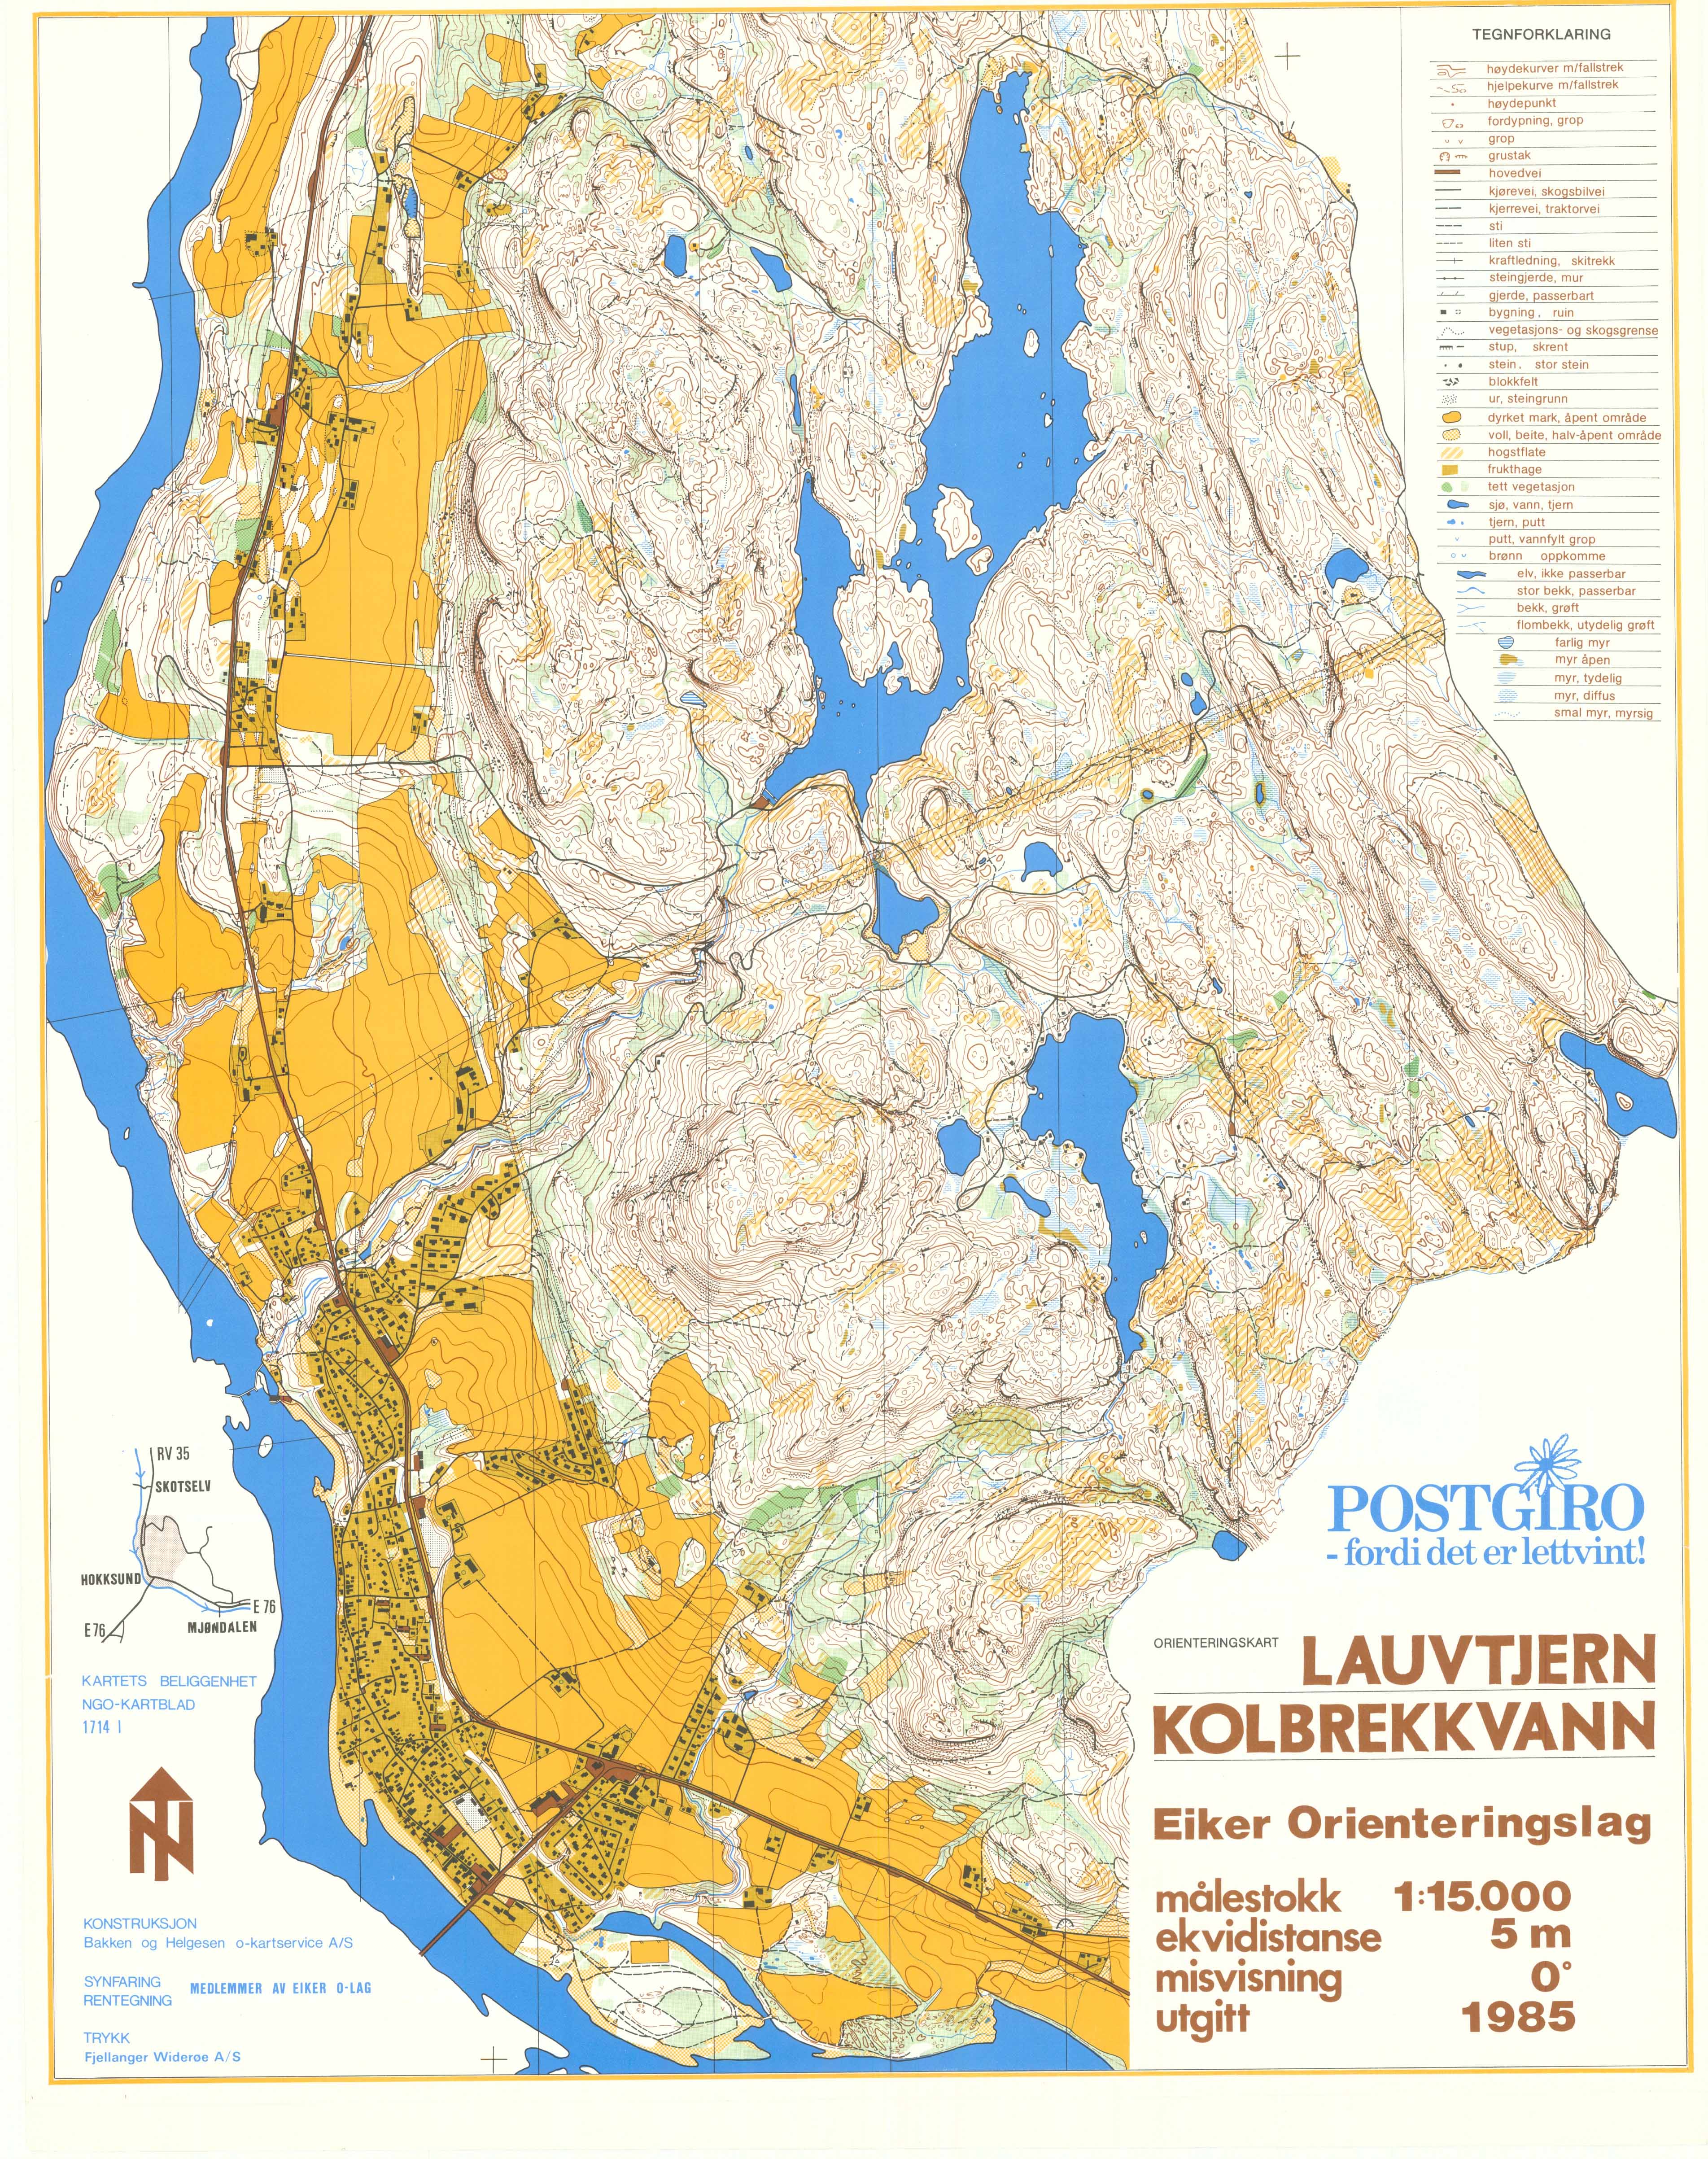 Lauvtjern - Kolbrekkvann (01-01-1985)